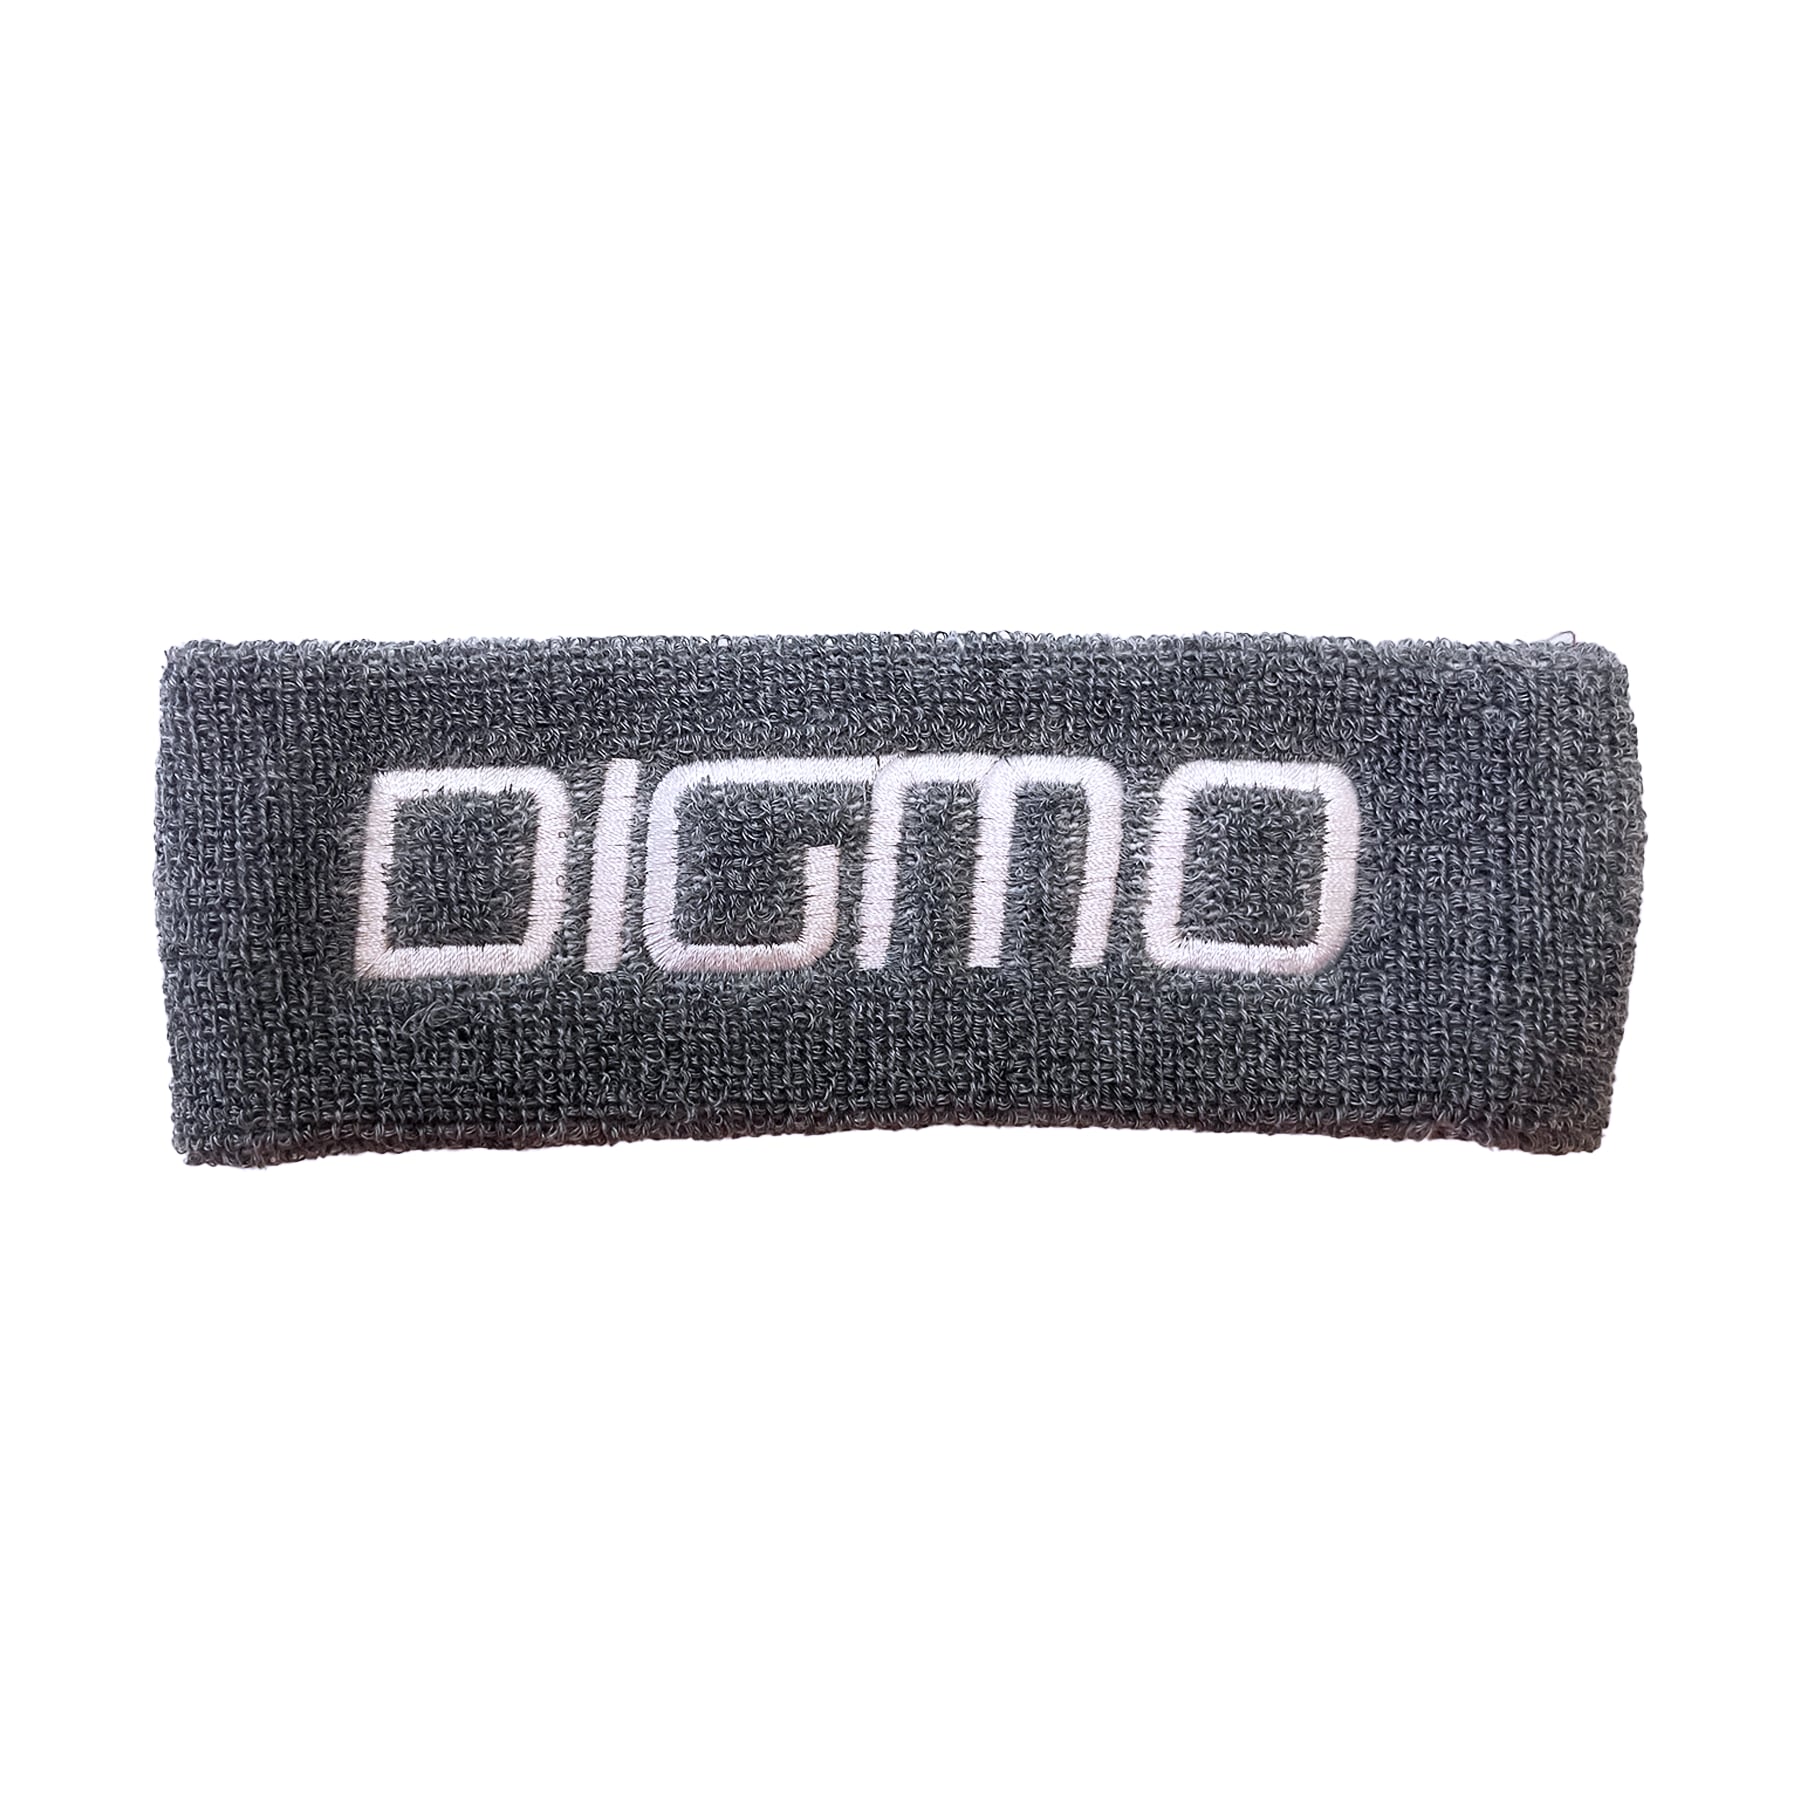 DIGMO - ヘッドバンド [HB01-GY]